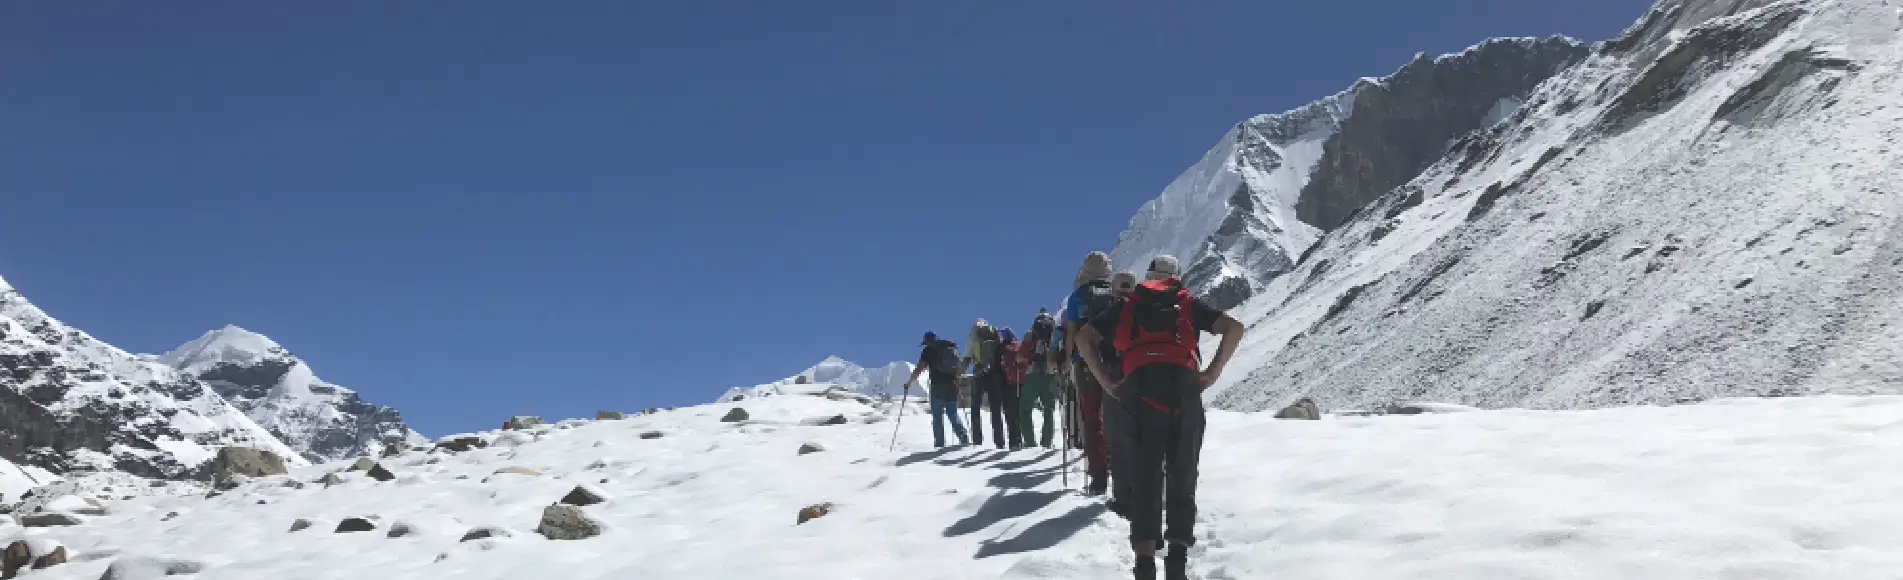 Peak Adventure Tour Himalayas